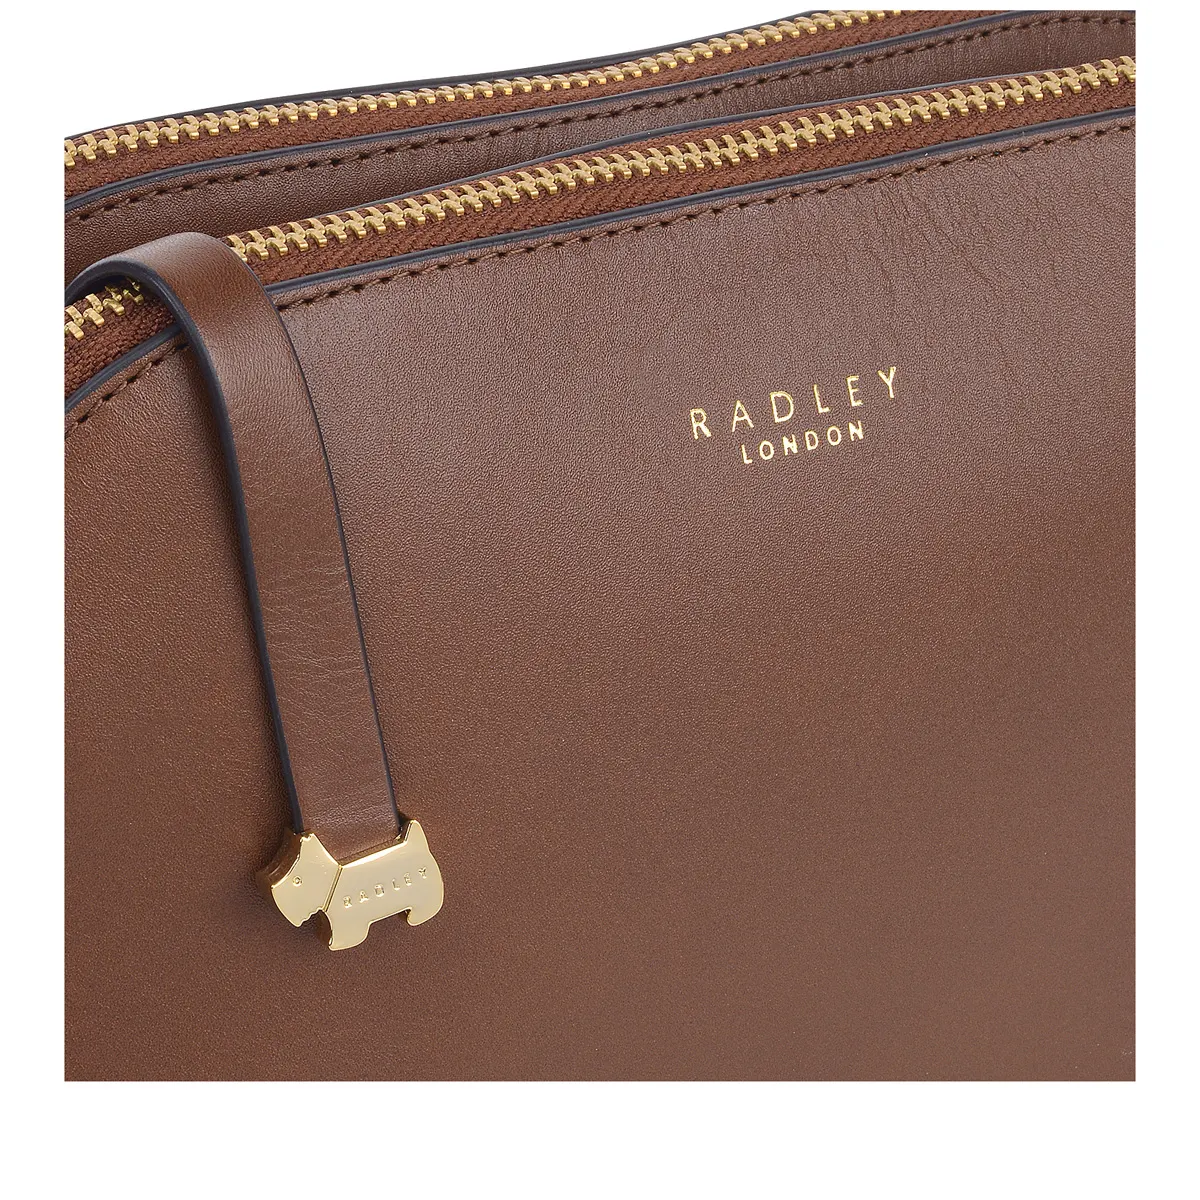 Radley London - Brown Leather Triple Compartment Crossbody